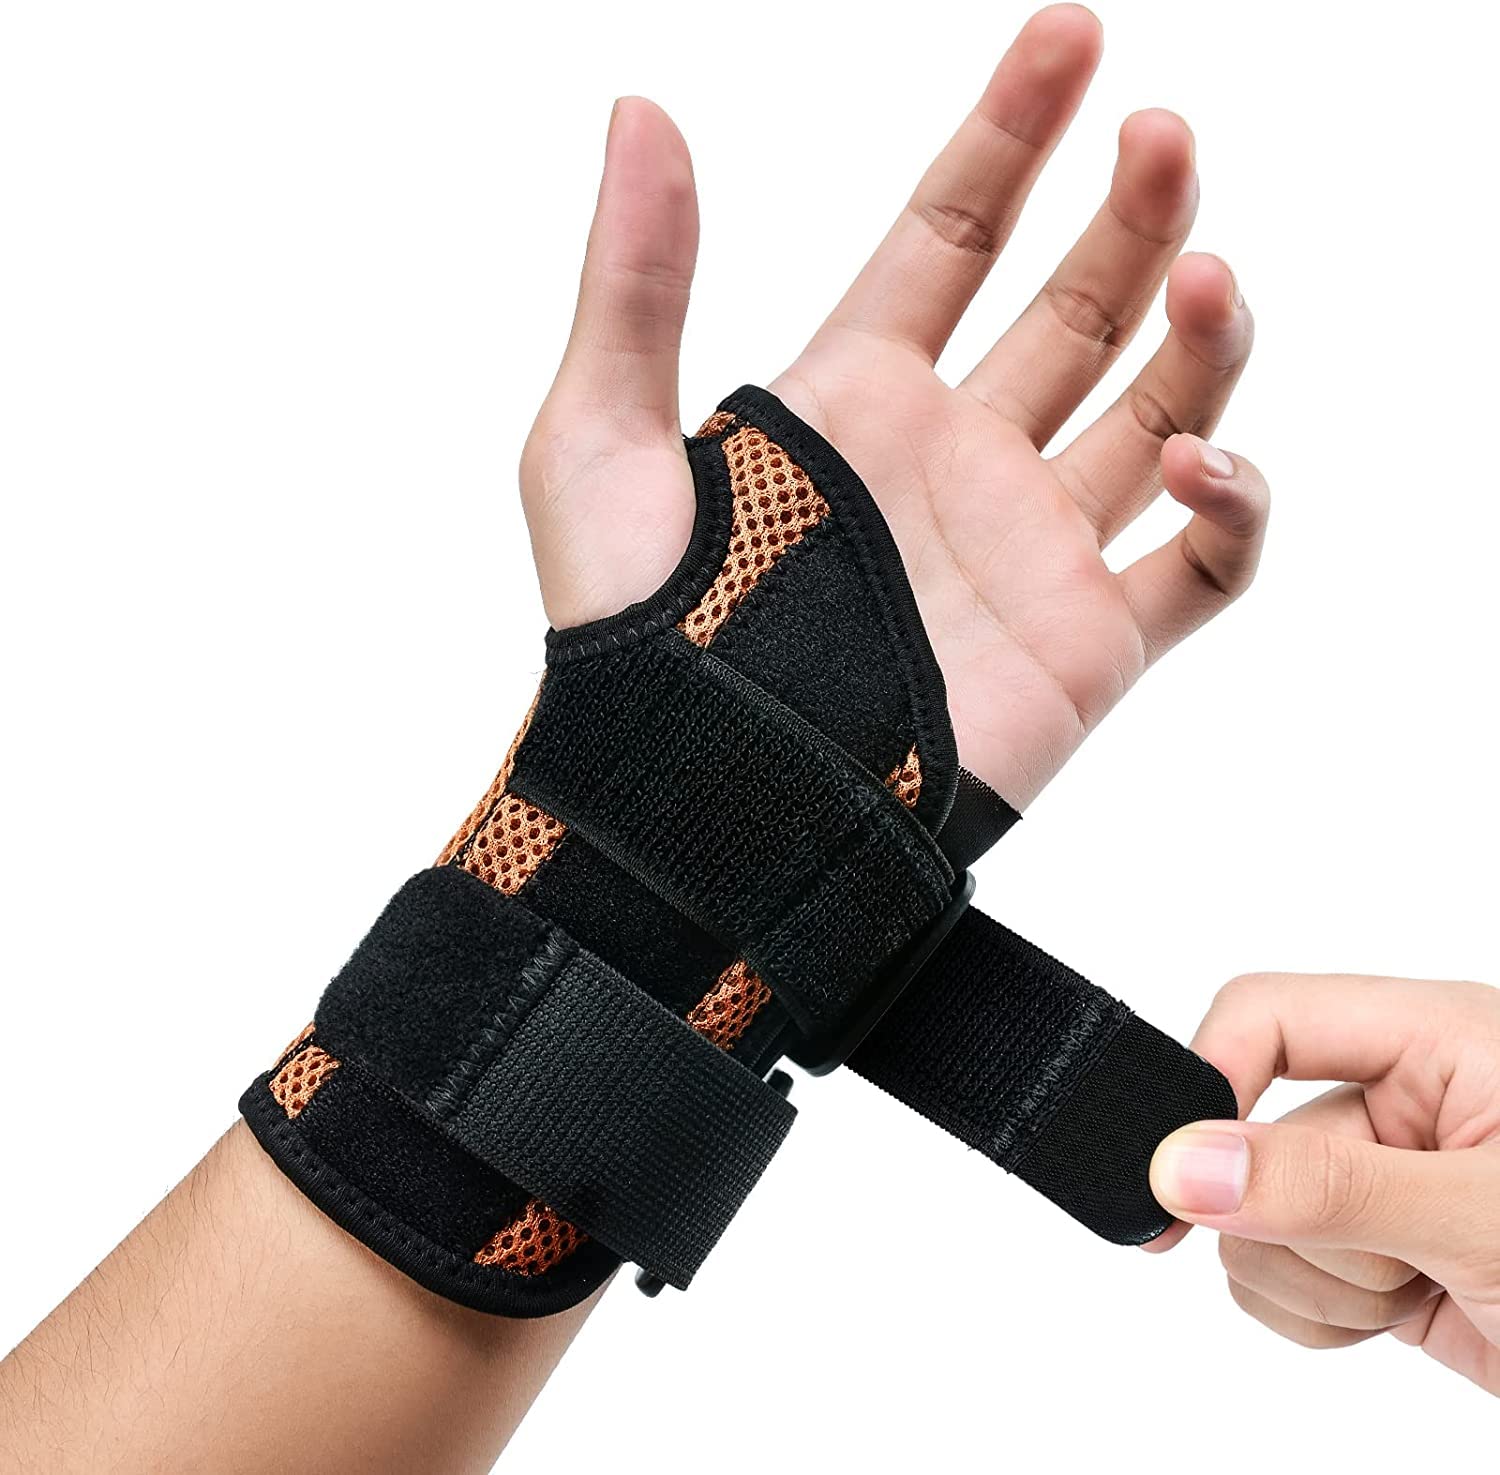 Wrist Brace, Wrist Sleep Support Brace Wrist Support with Splints